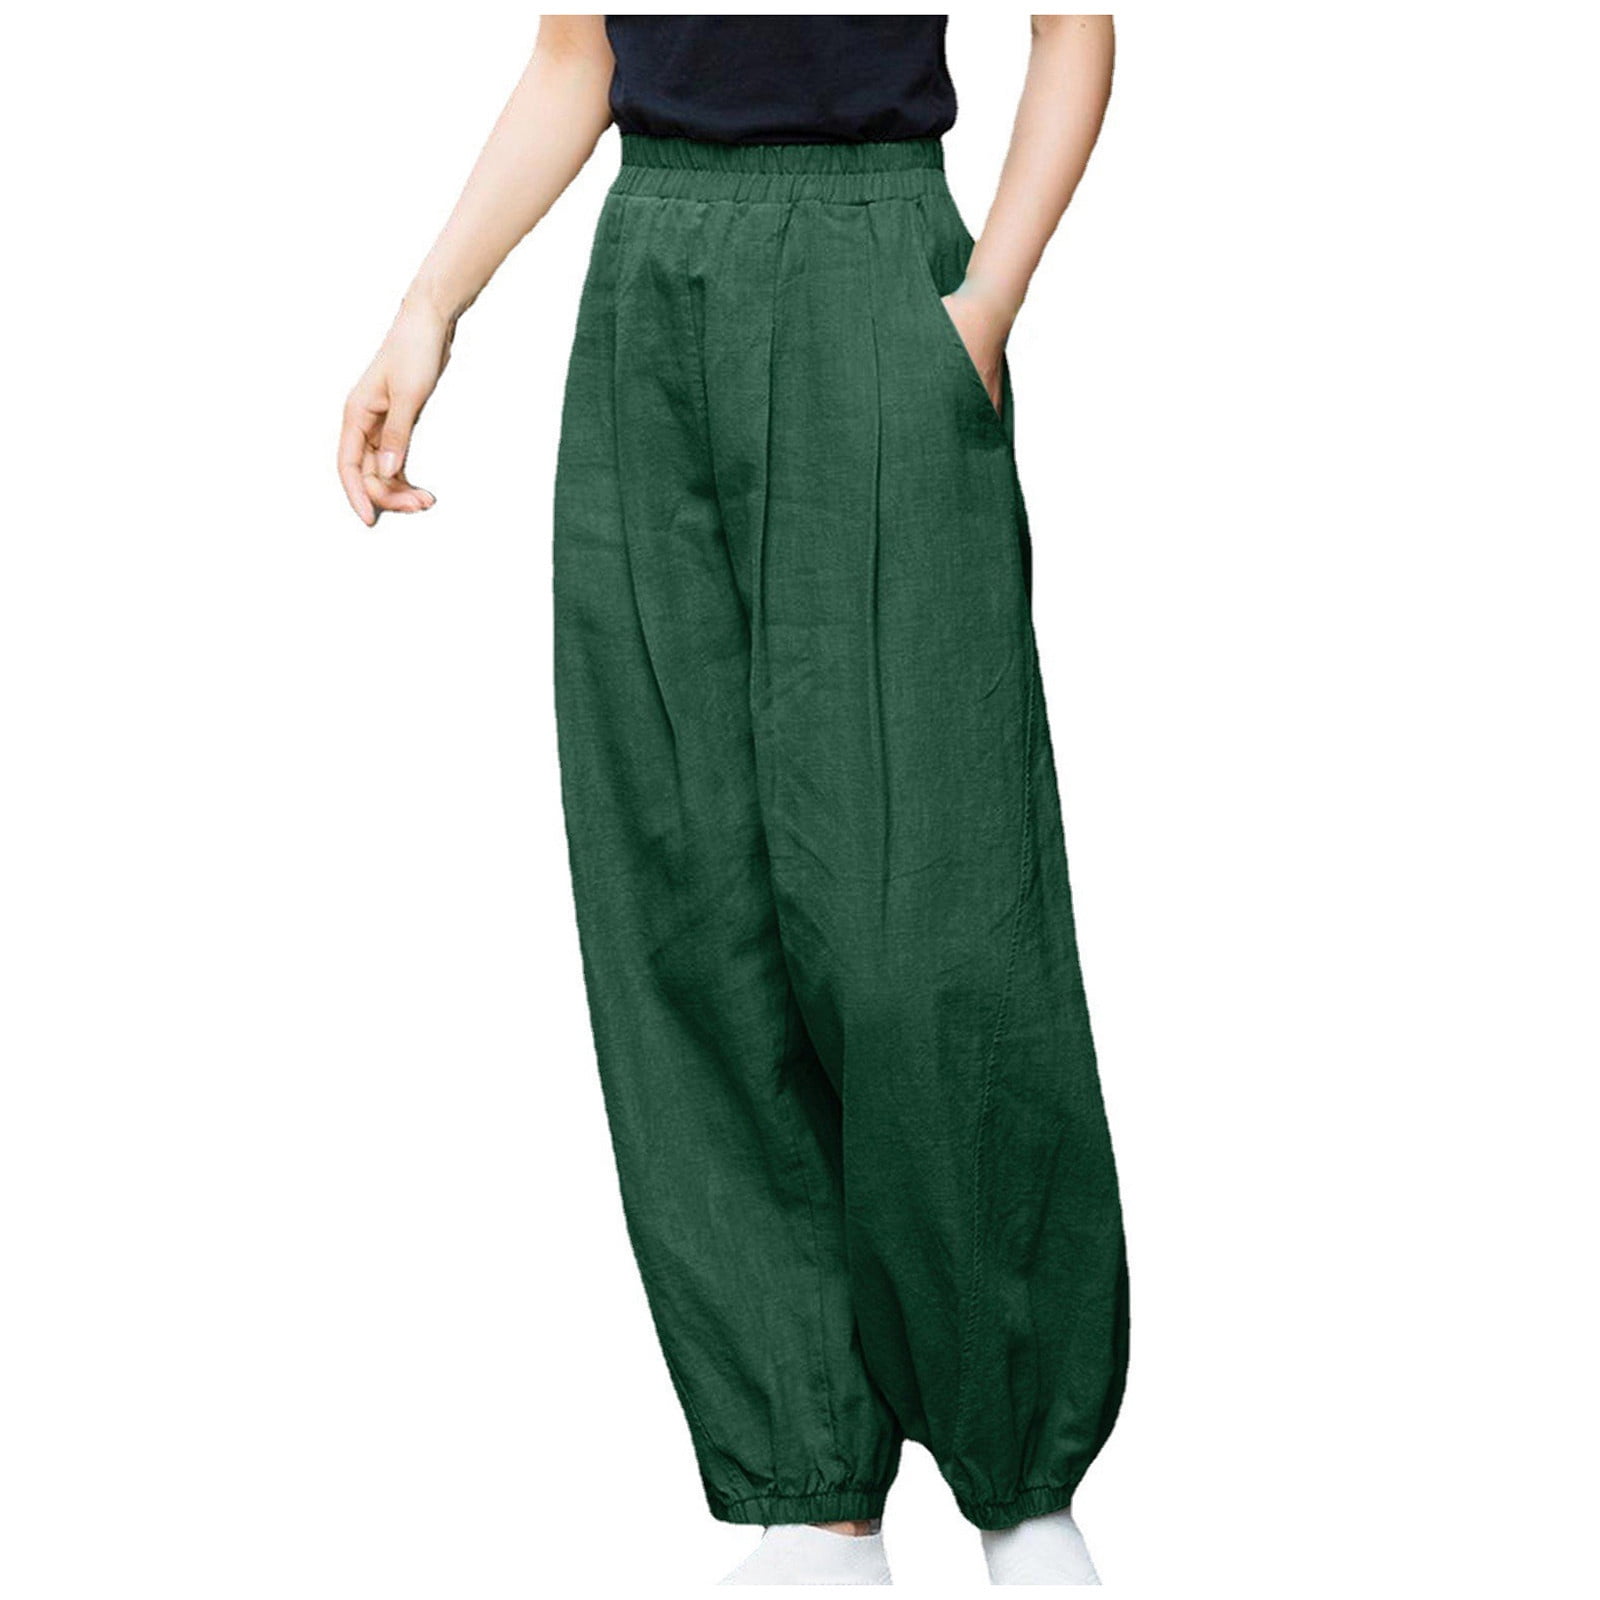 16 Jeans Nlzgmsj Za Women Women Green Casual Long Pants Trousers Vintage  Style hot pants @ Best Price Online